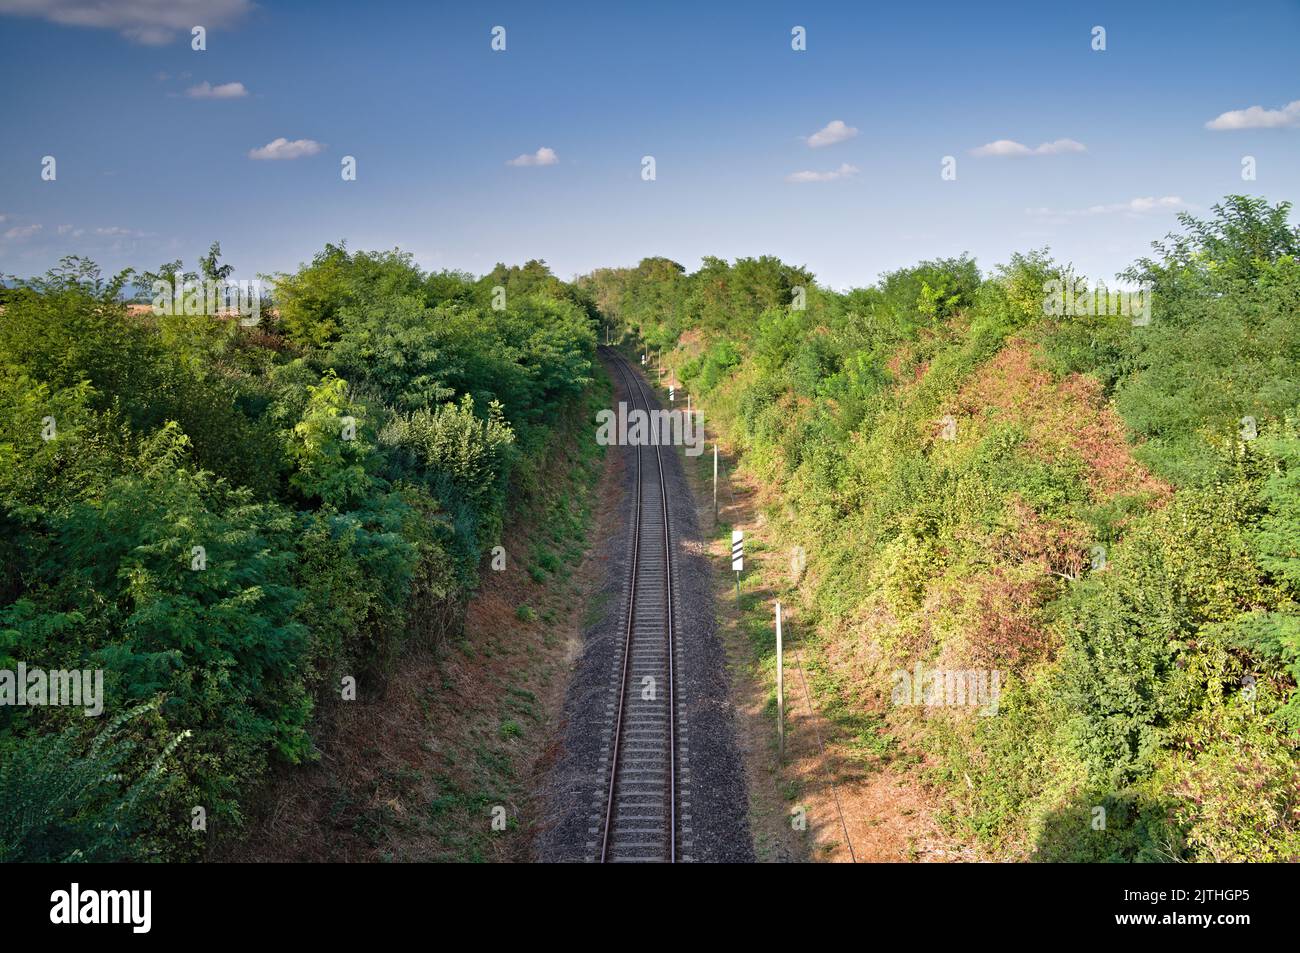 Scenic view from bridge over railway tracks Stock Photo